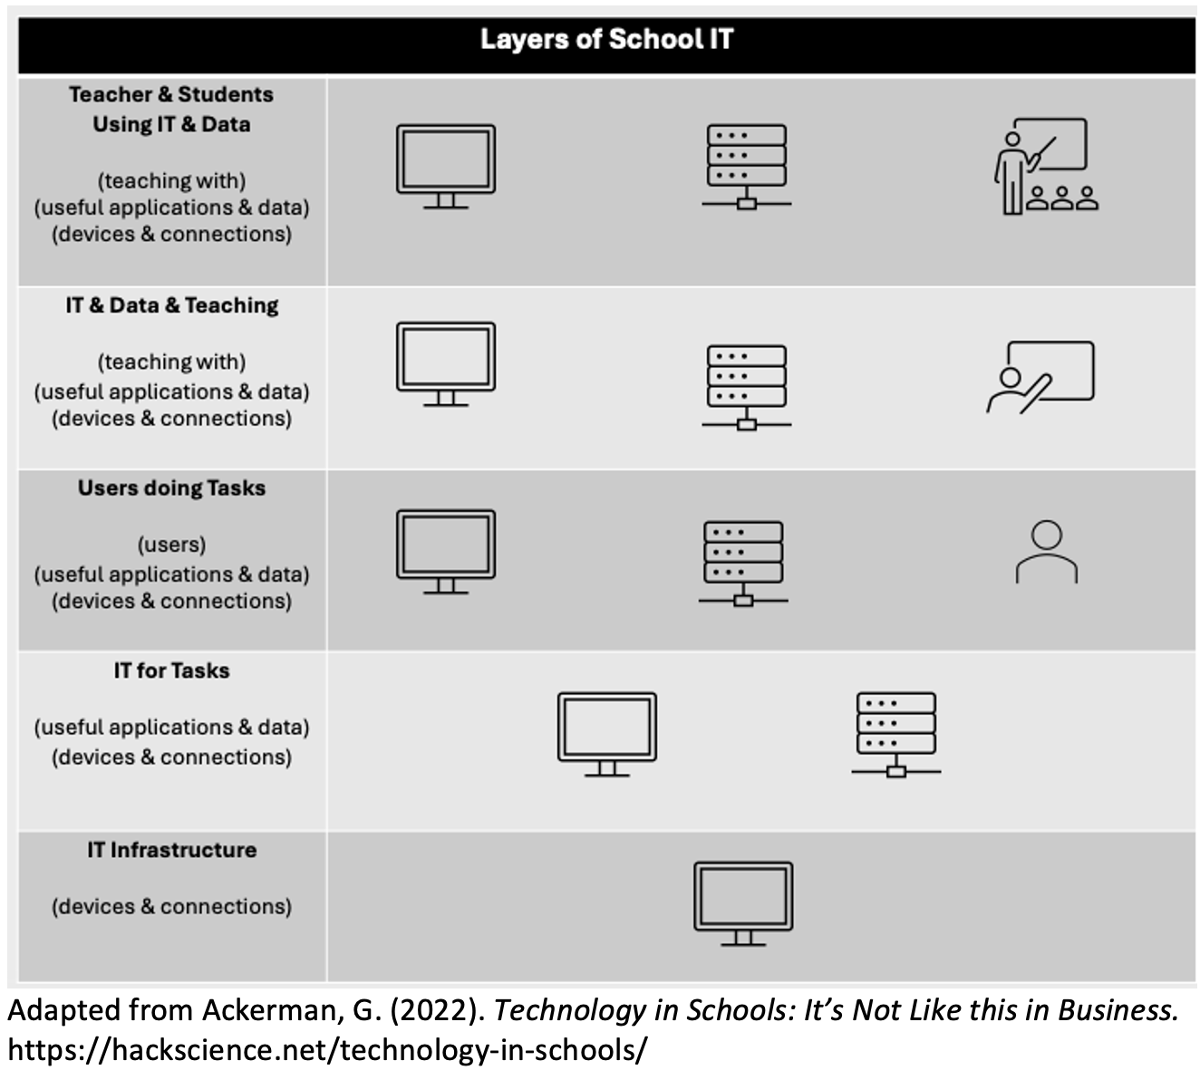 chart summarizing Ackerman's 5 layers of information technology in schools